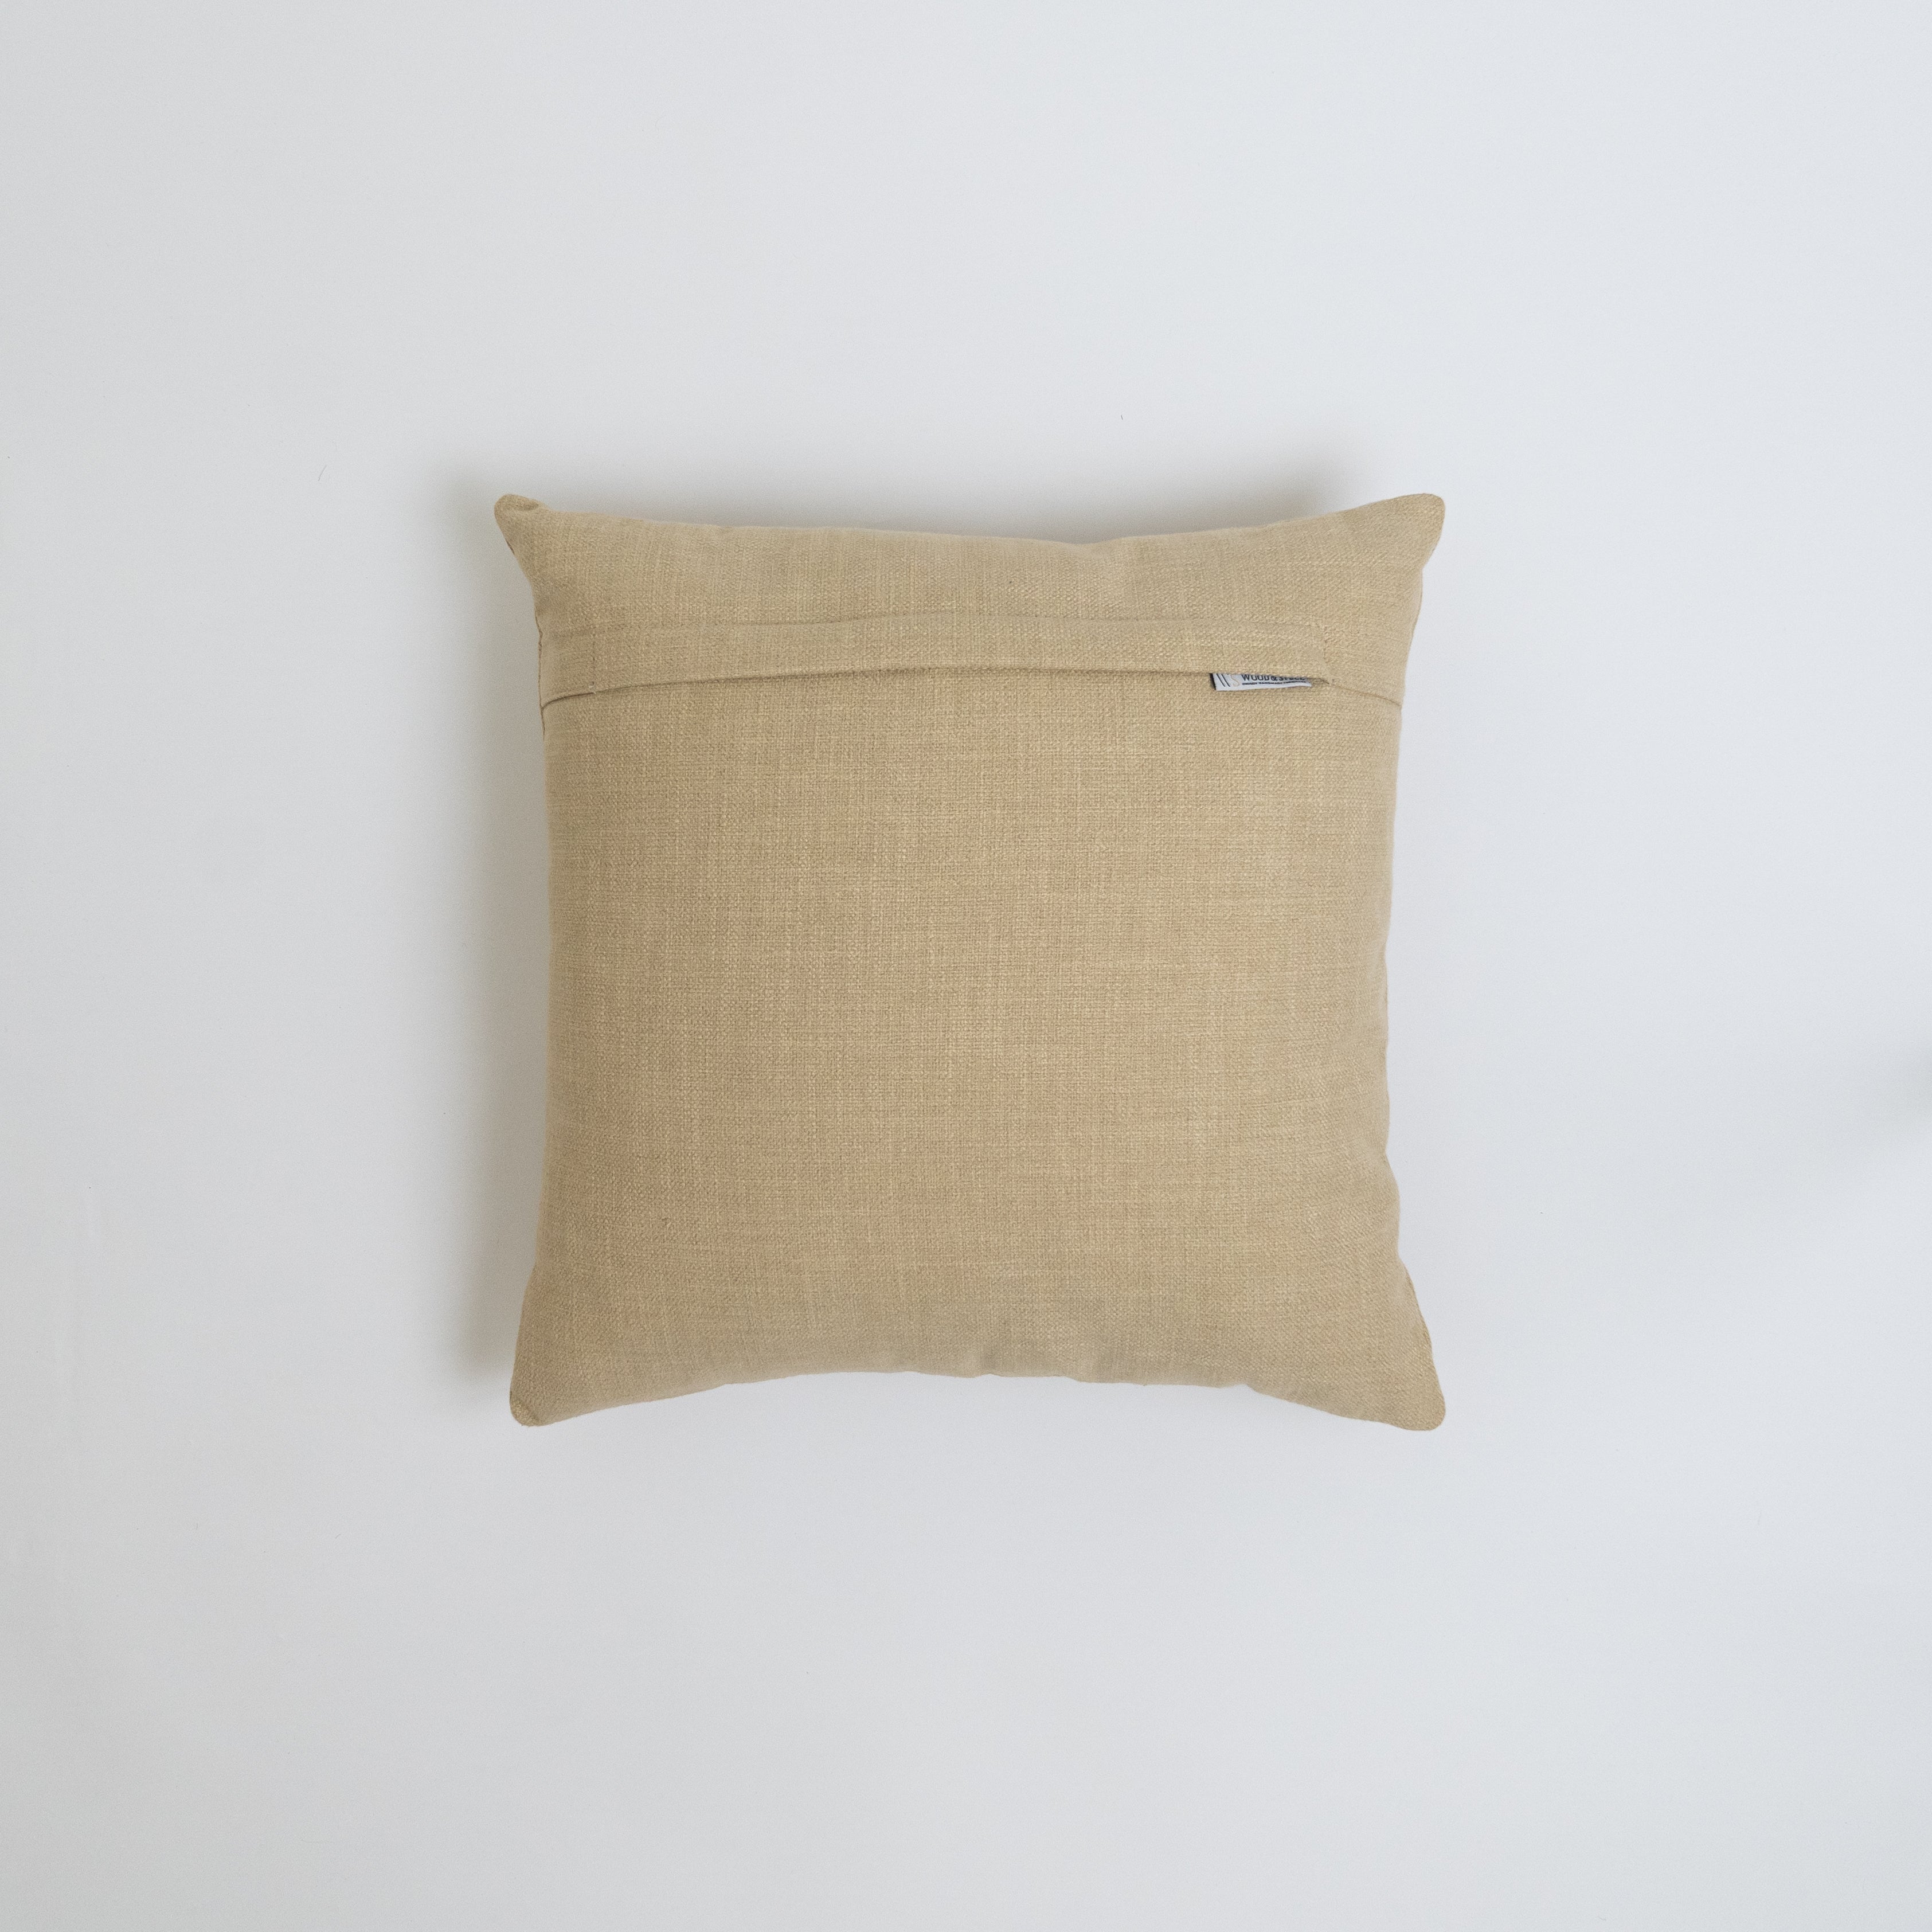 Cushion Cover 45 x45cm  - WS Living - UAE - Cushions Wood and steel Furnitures - Dubai